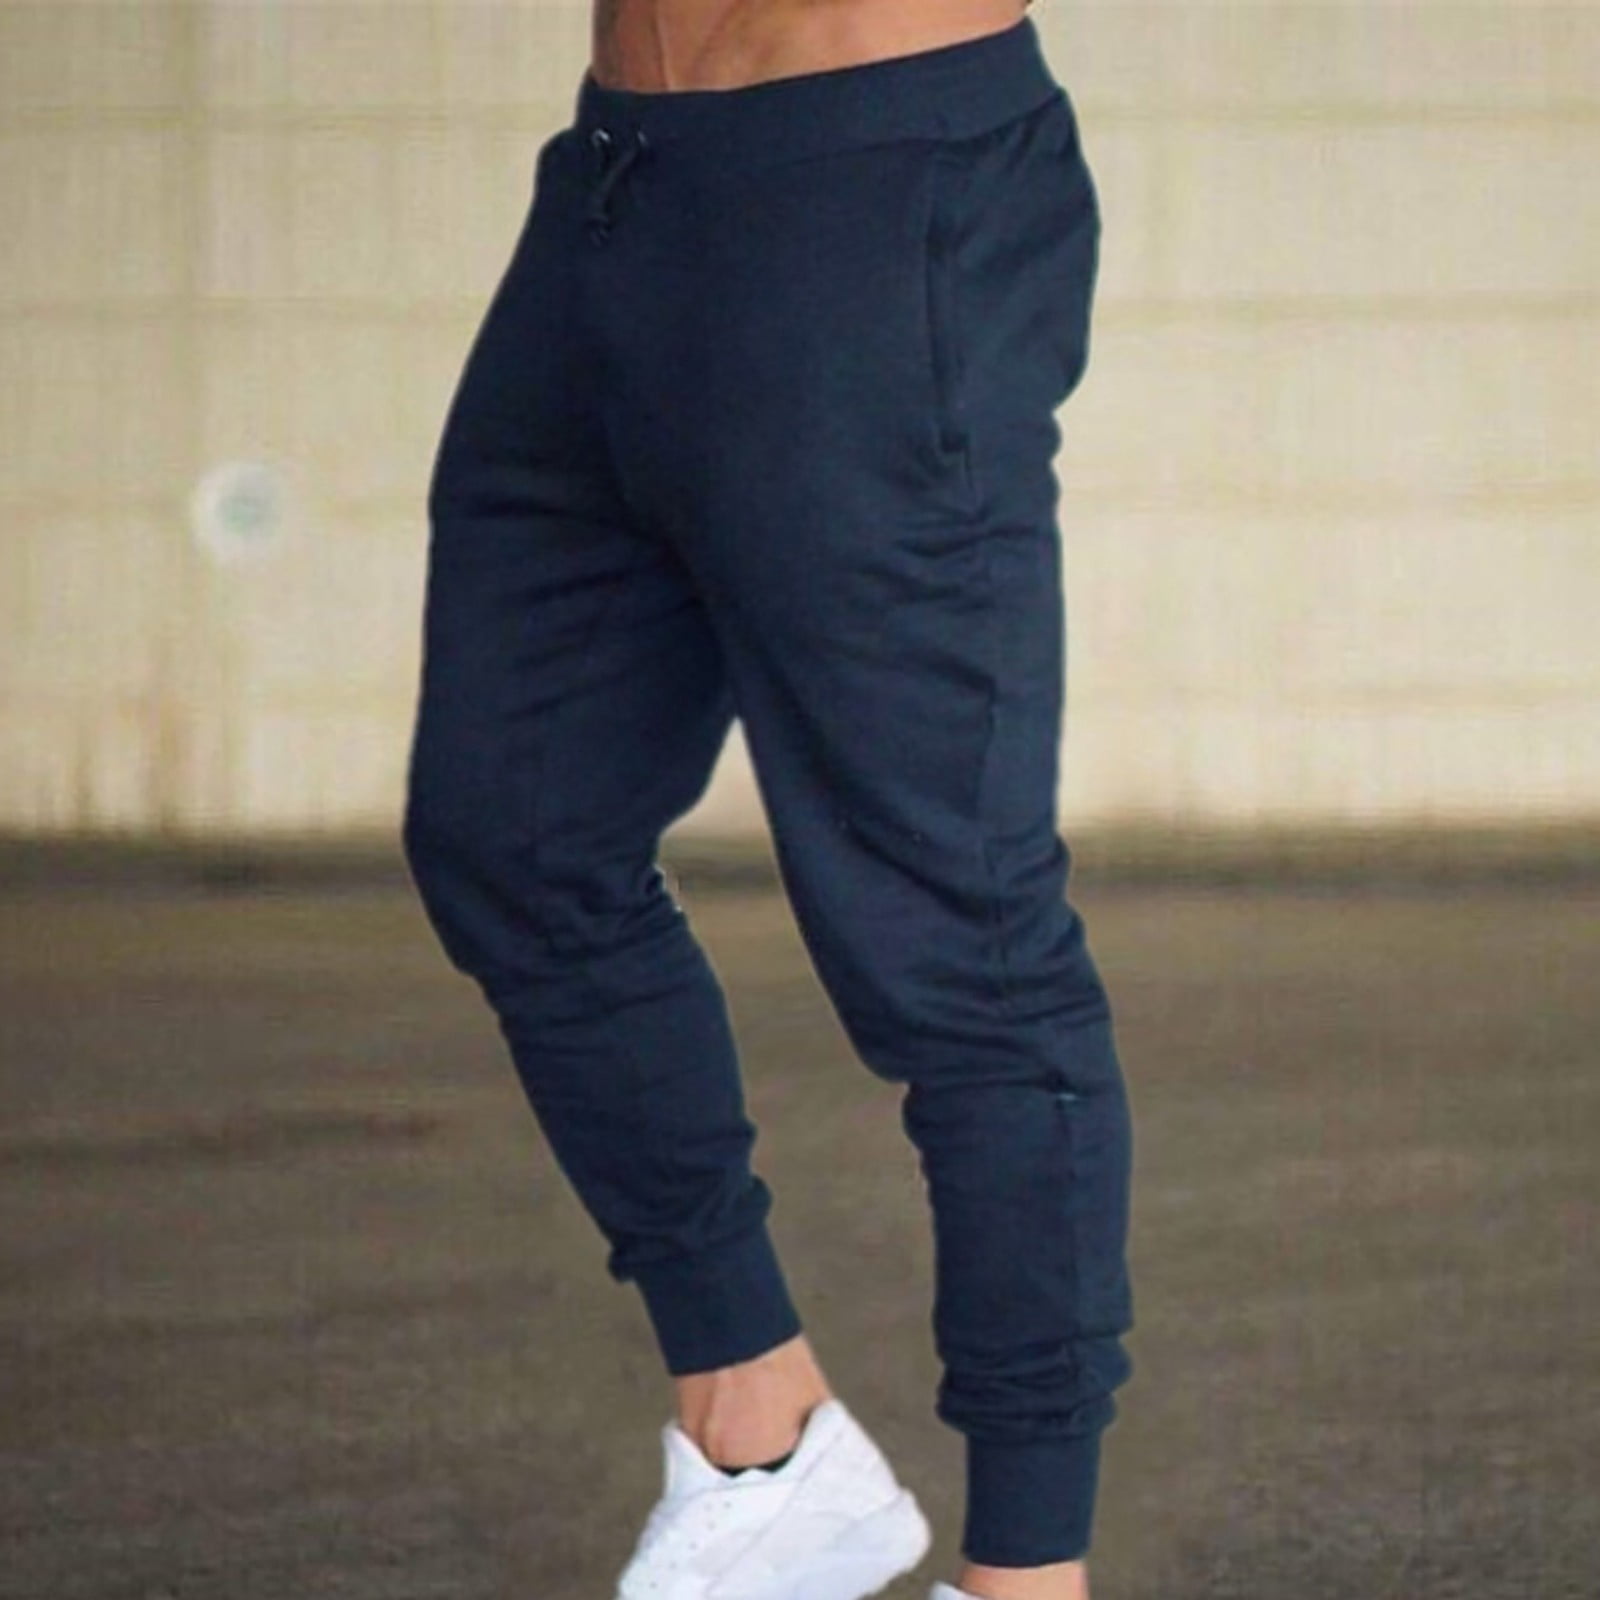 ICHUANYI Men's Fitness Training Pants Slim Casual Sweatpants Small Foot ...